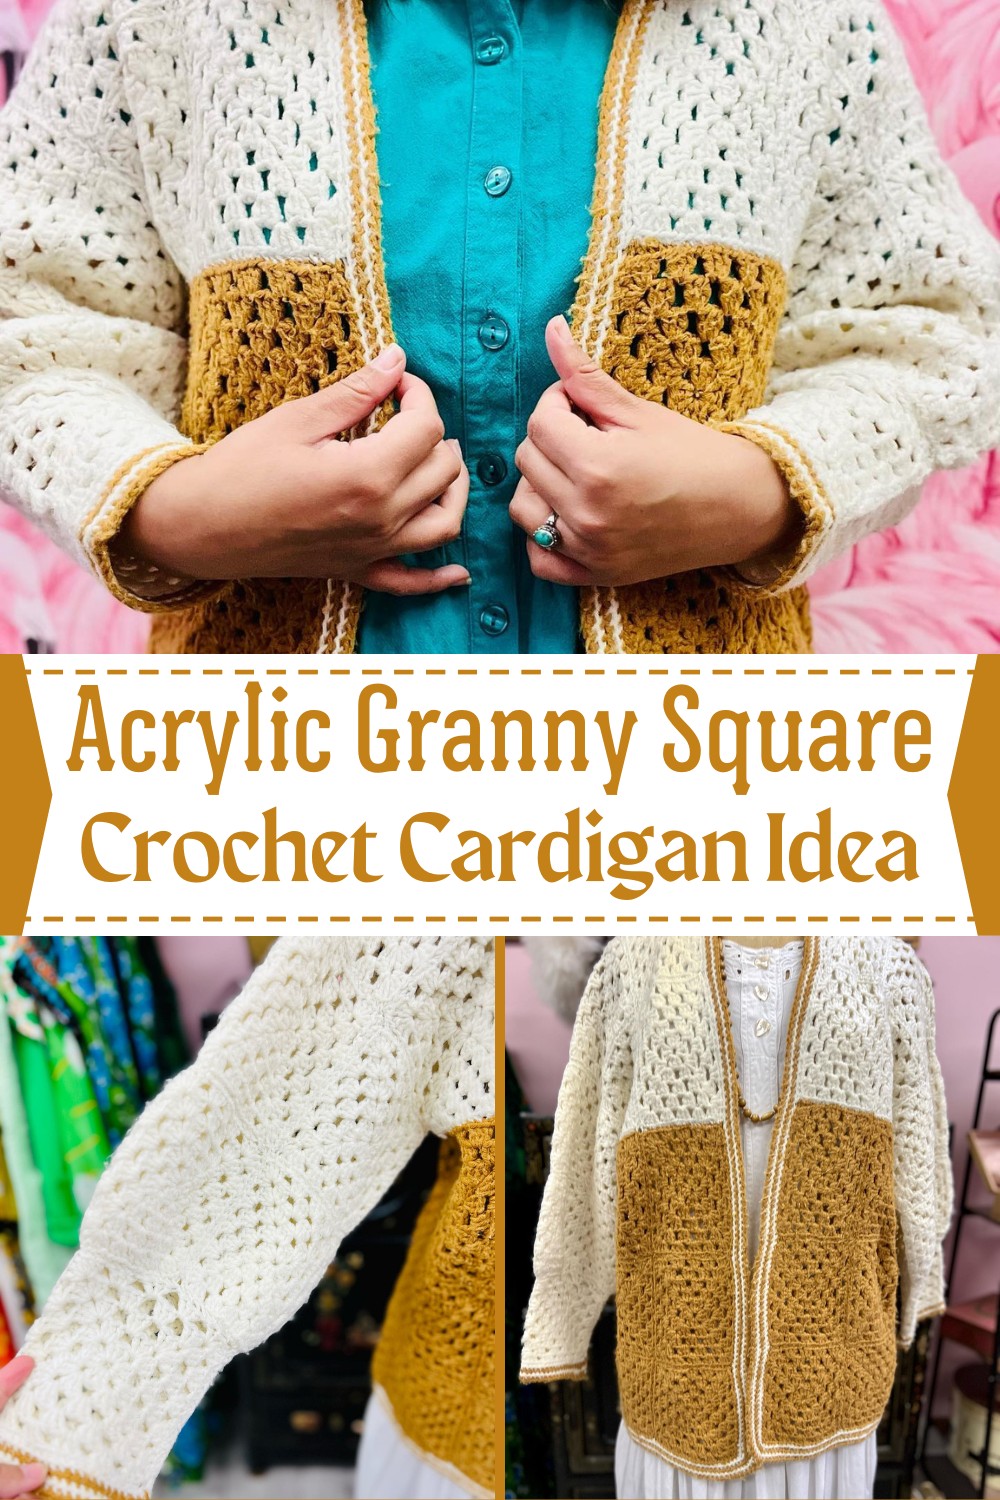 Crochet Acrylic Granny Square Cardigan Idea